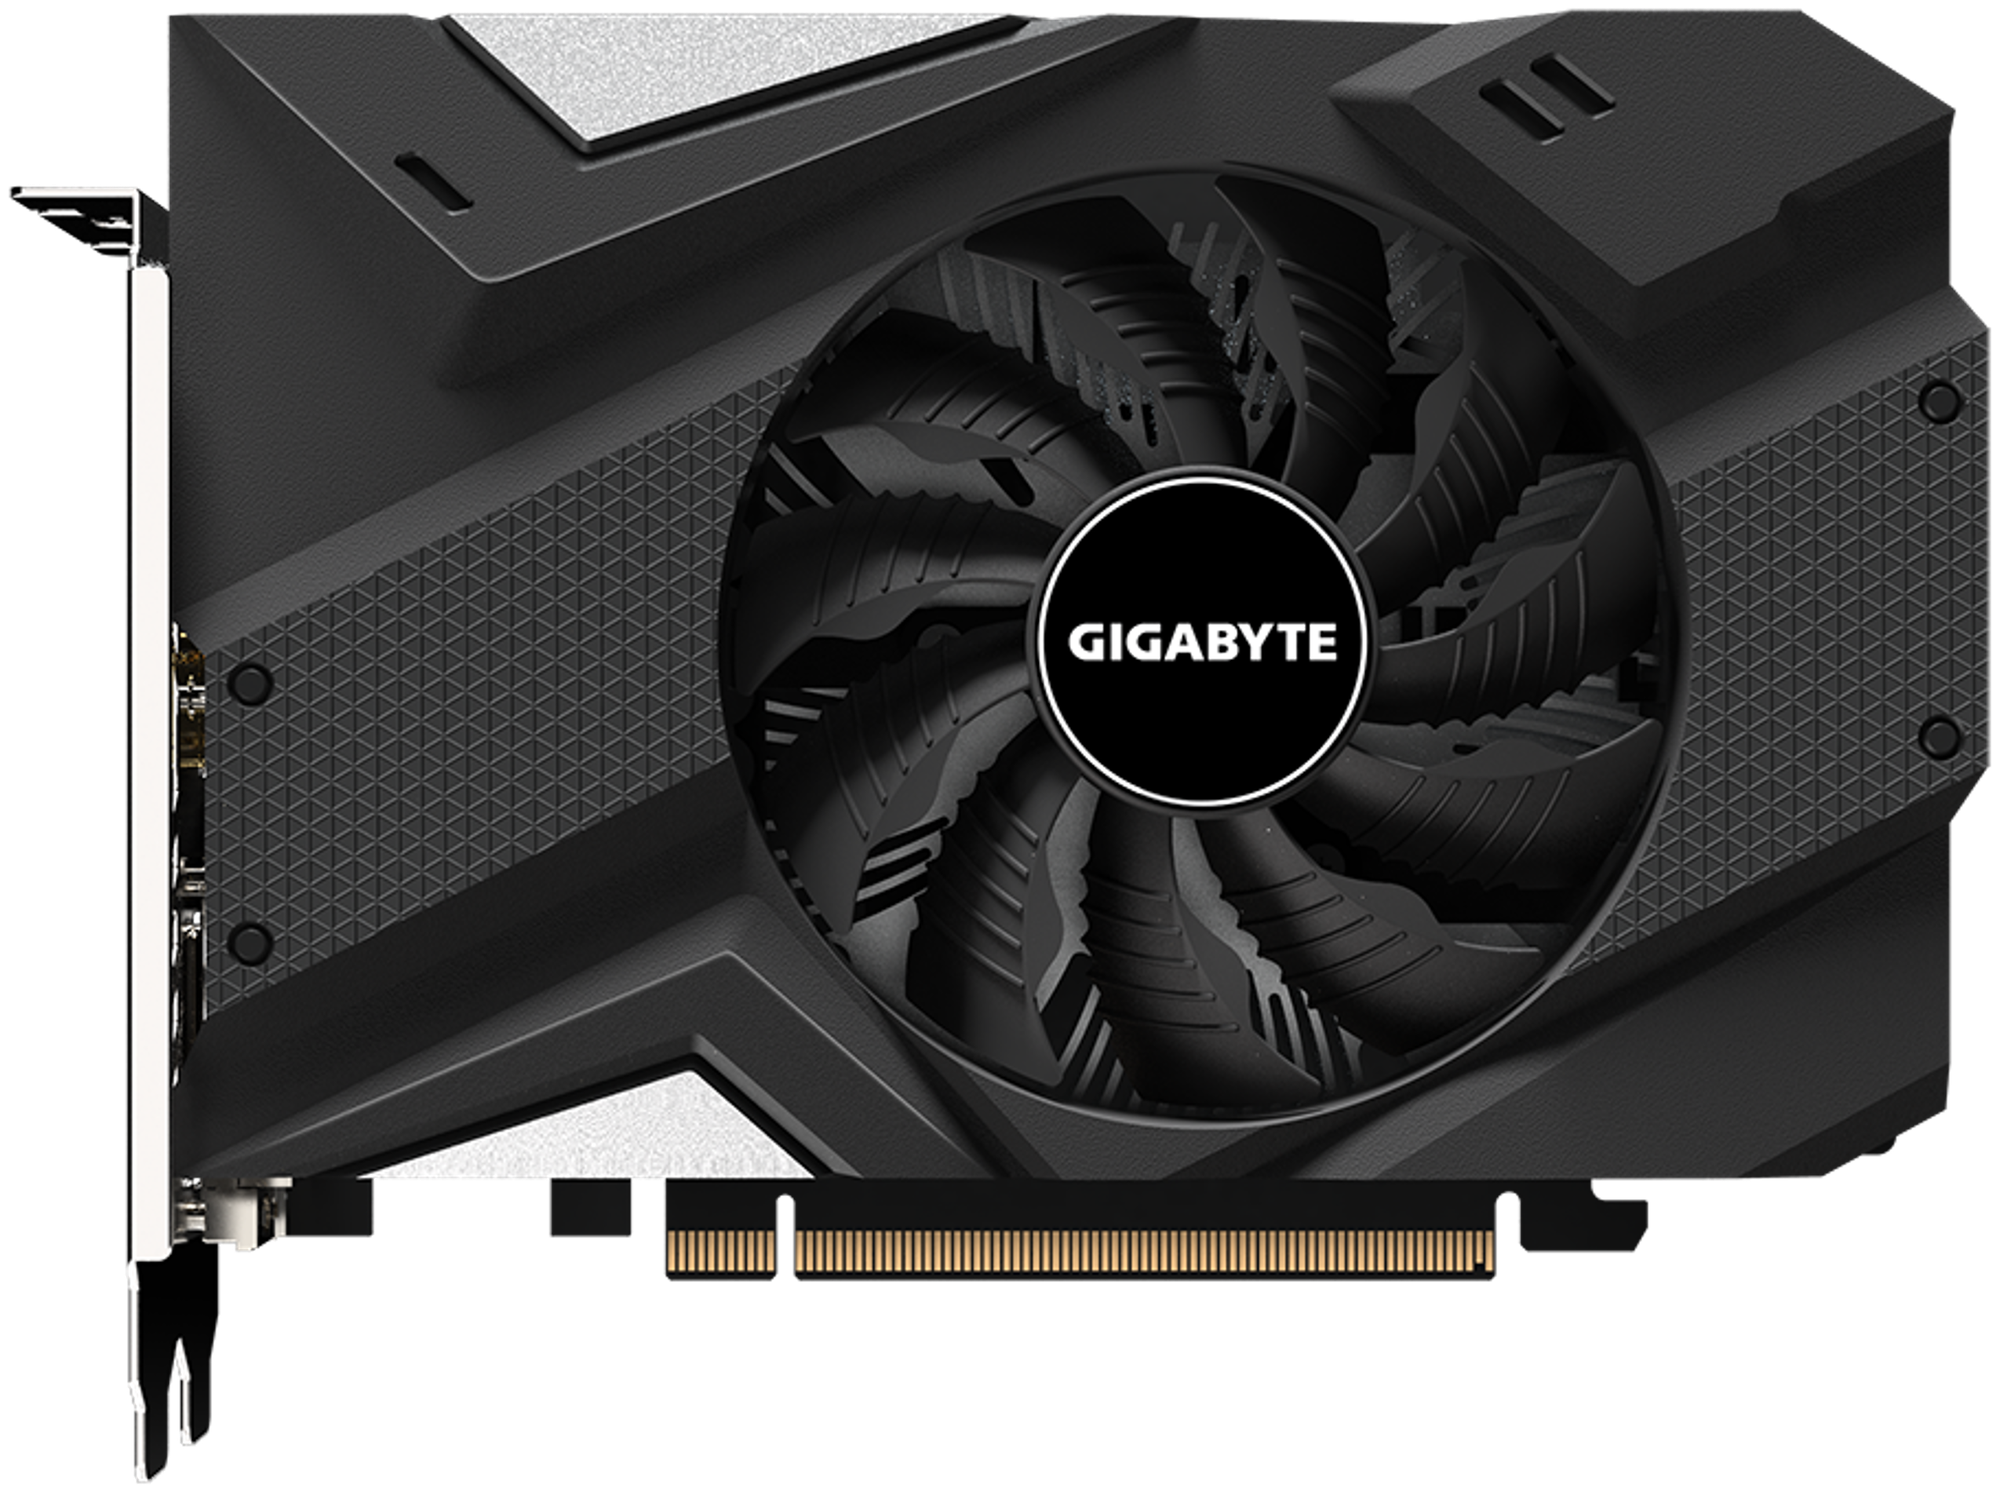 Видеокарта GIGABYTE GeForce GTX 1650 D6 OC 4G (GV-N1656OC-4GD) rev. 2.0, Retail